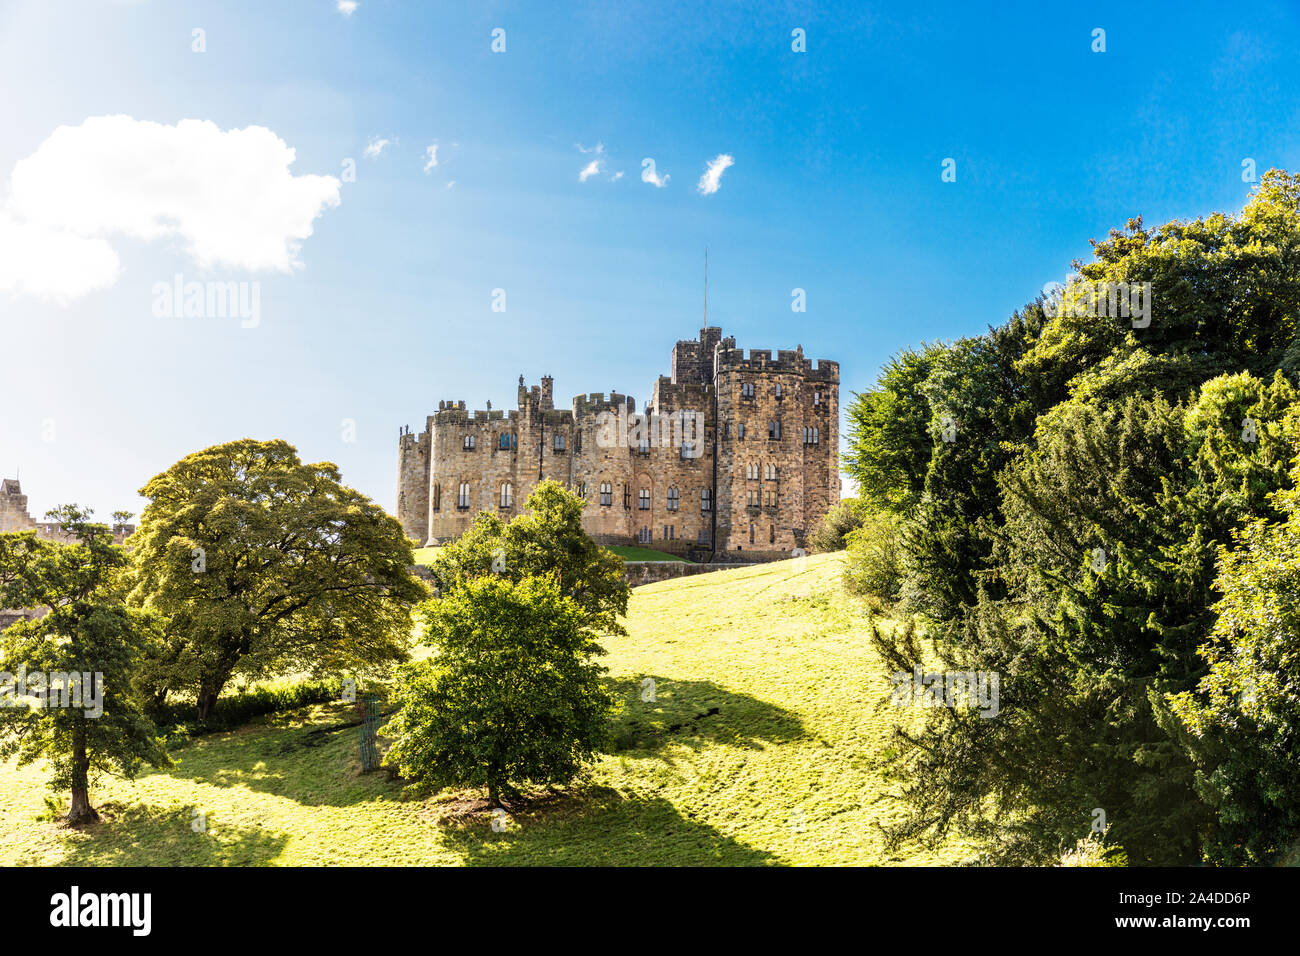 Alnwick Castle, Alnwick castle, Alnwick, Northumberland, England, UK, castle, castles, exterior, grounds, castle grounds, facade, building, Stock Photo